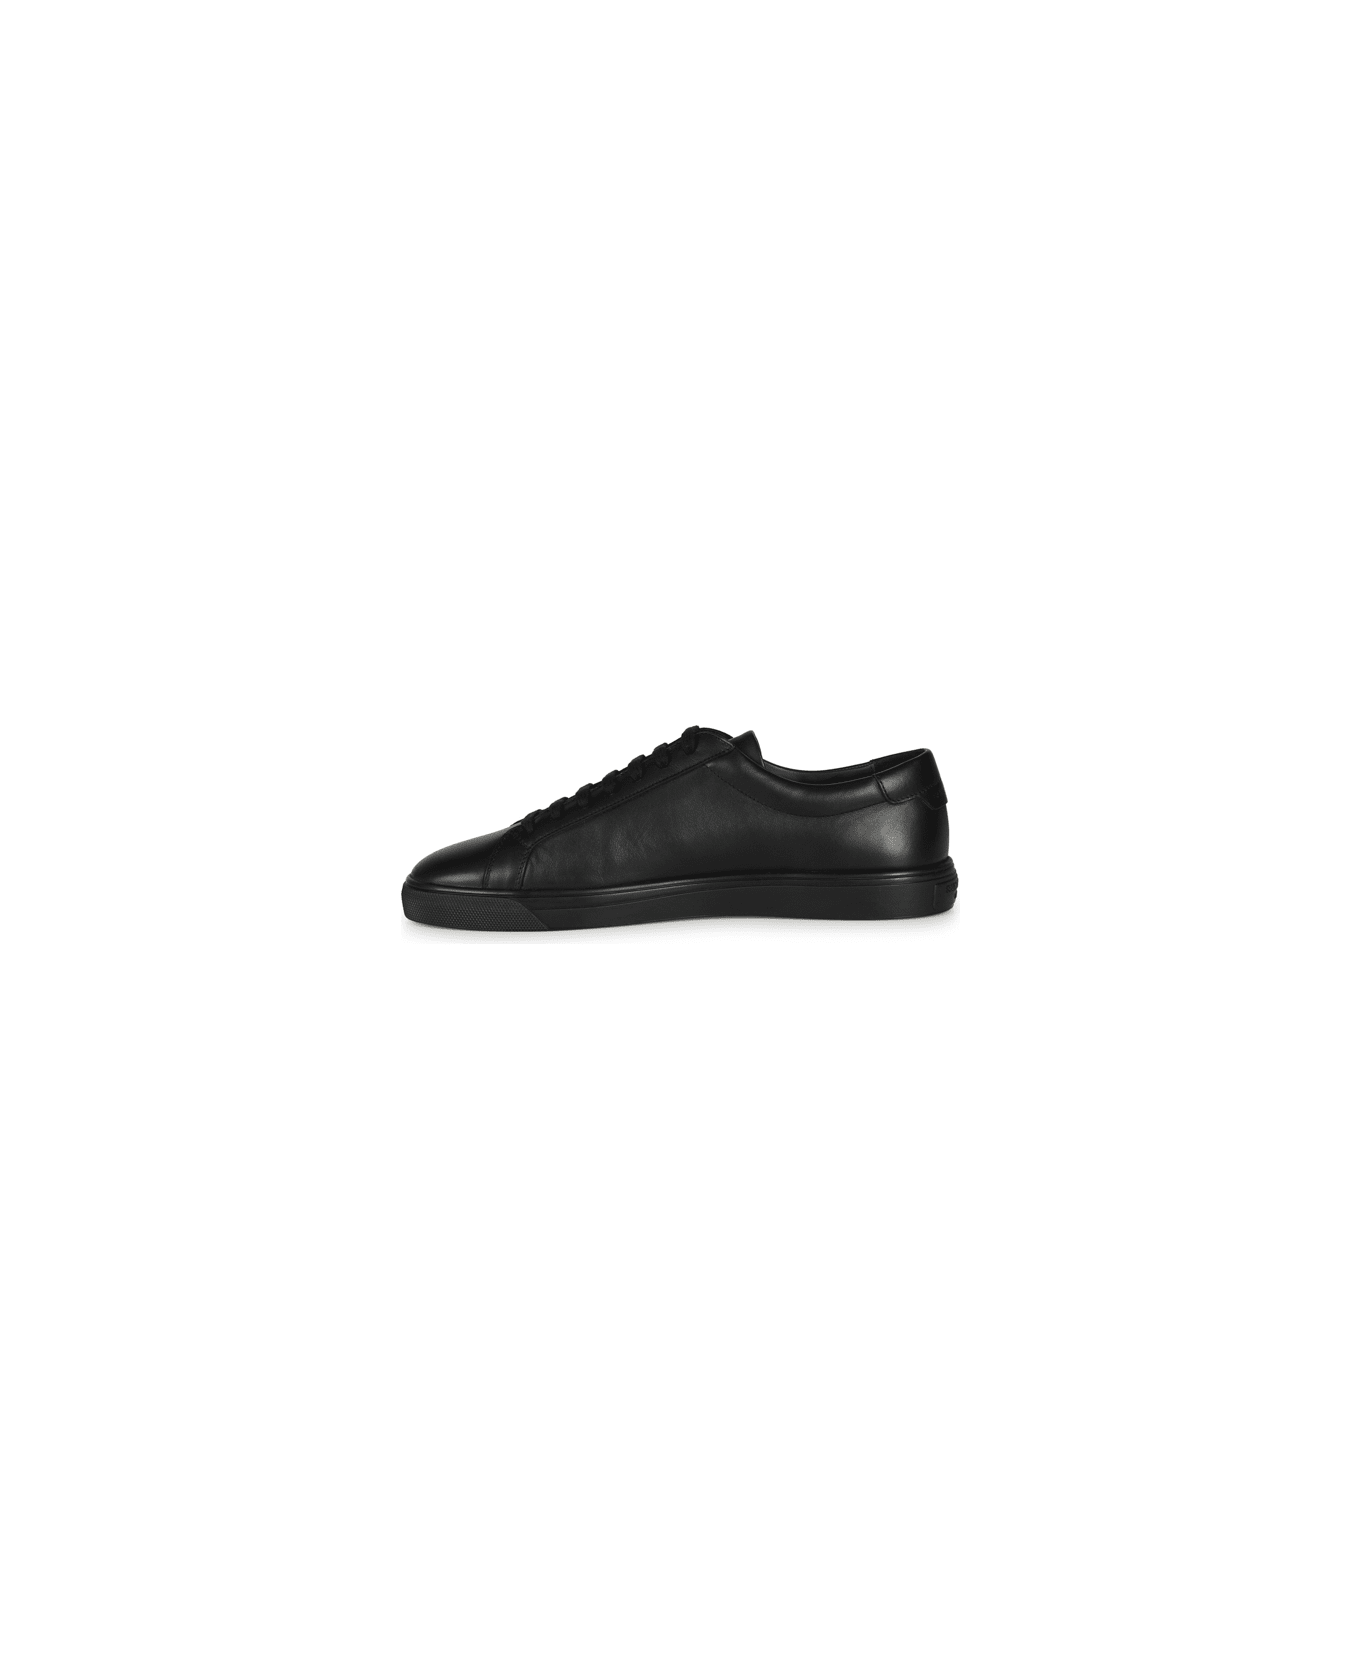 Saint Laurent Andy Sneakers - Black